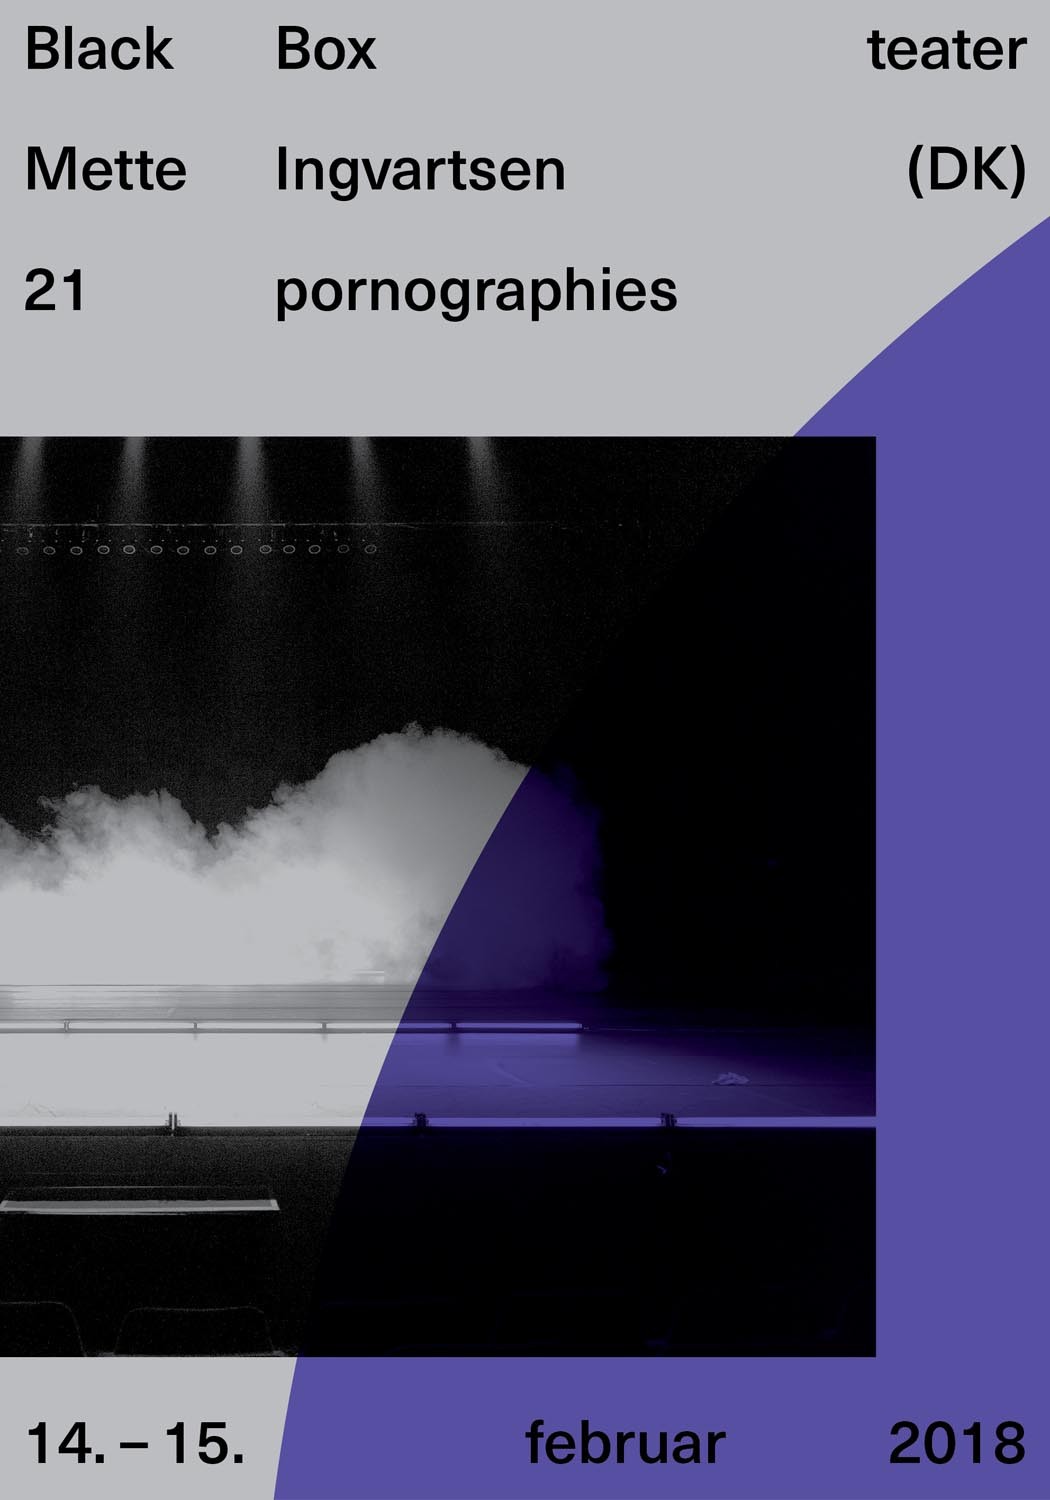 21 pornographies â€“ Black Box teater